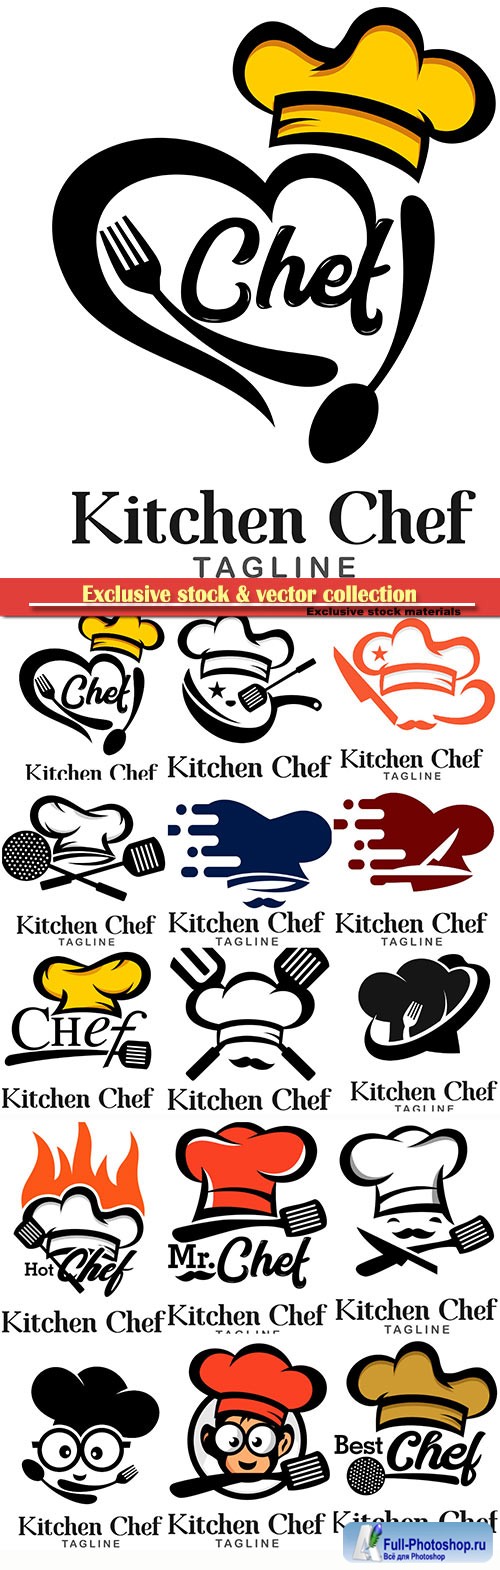 Kitchen chef logos in vector